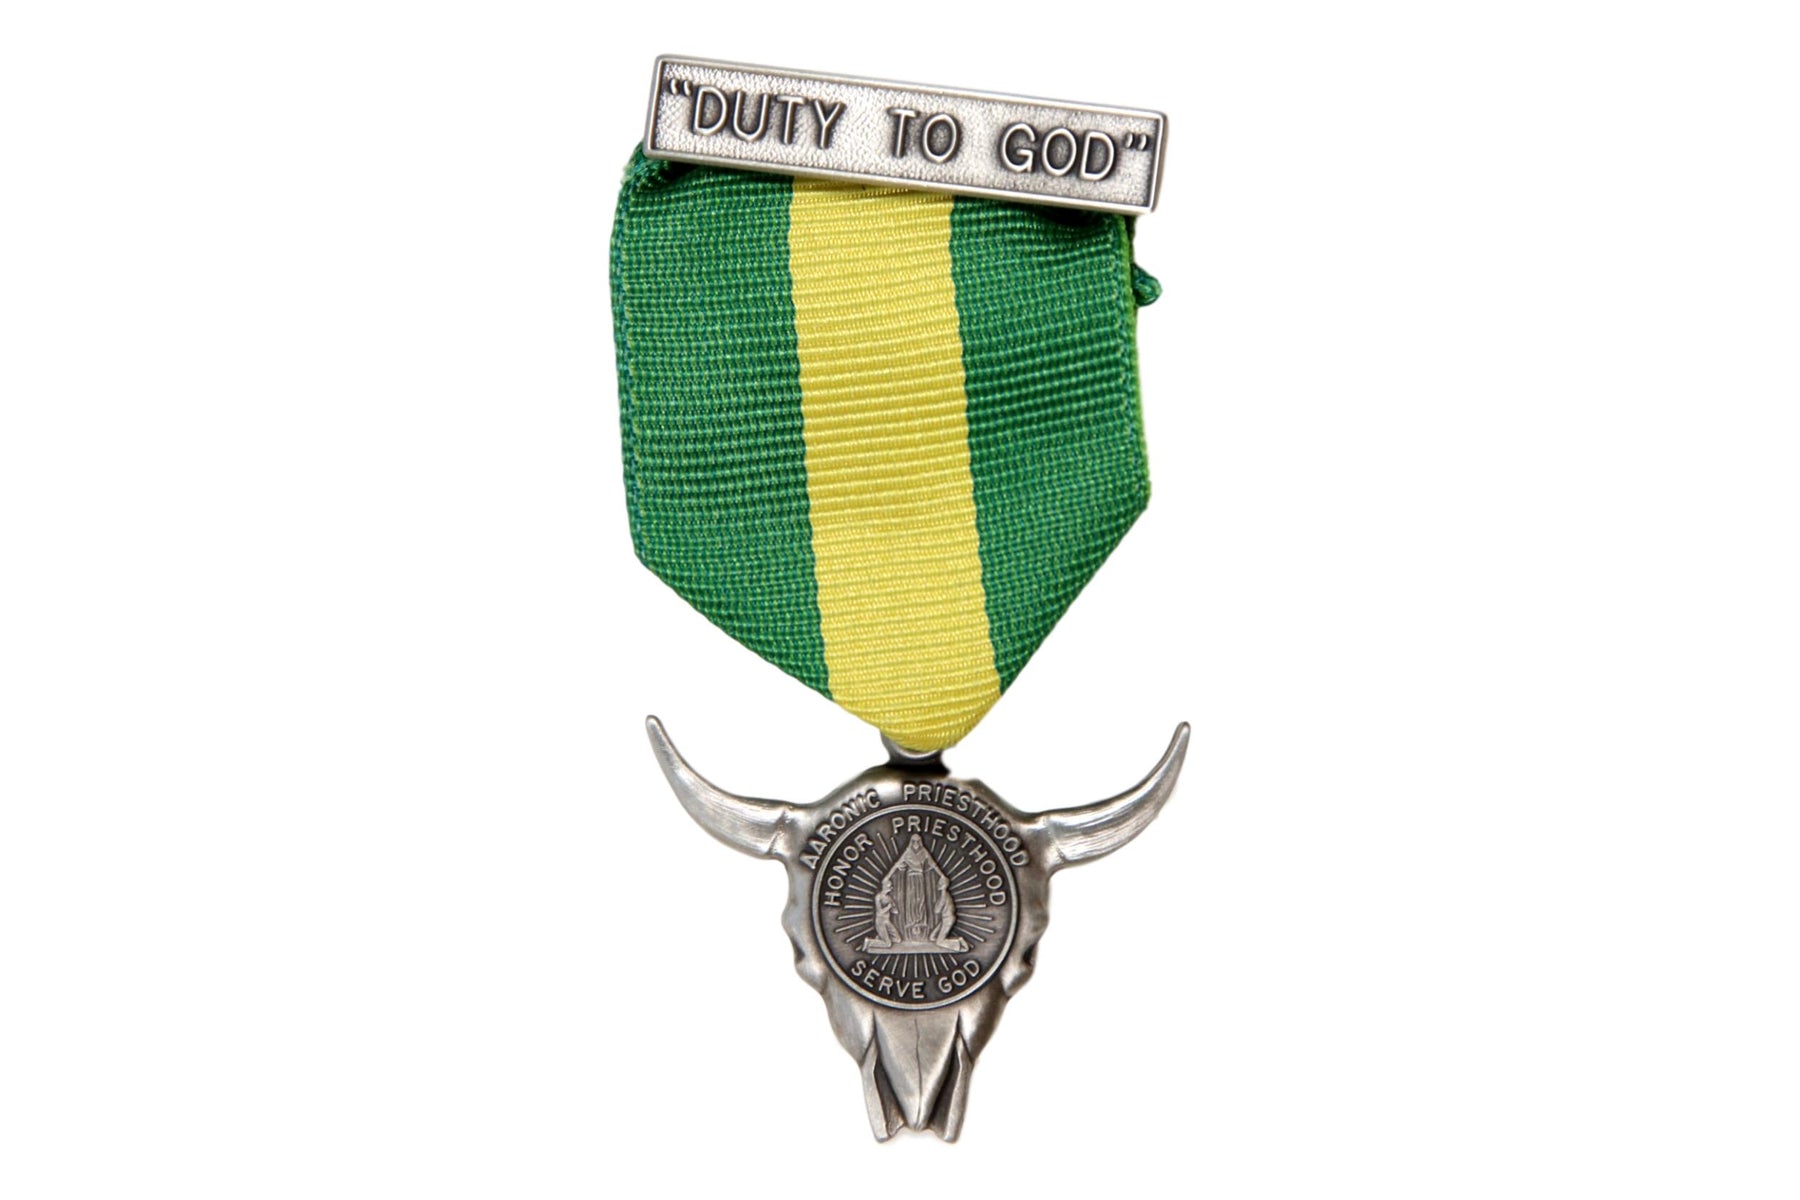 Duty to God Award Medal LDS Type 7B